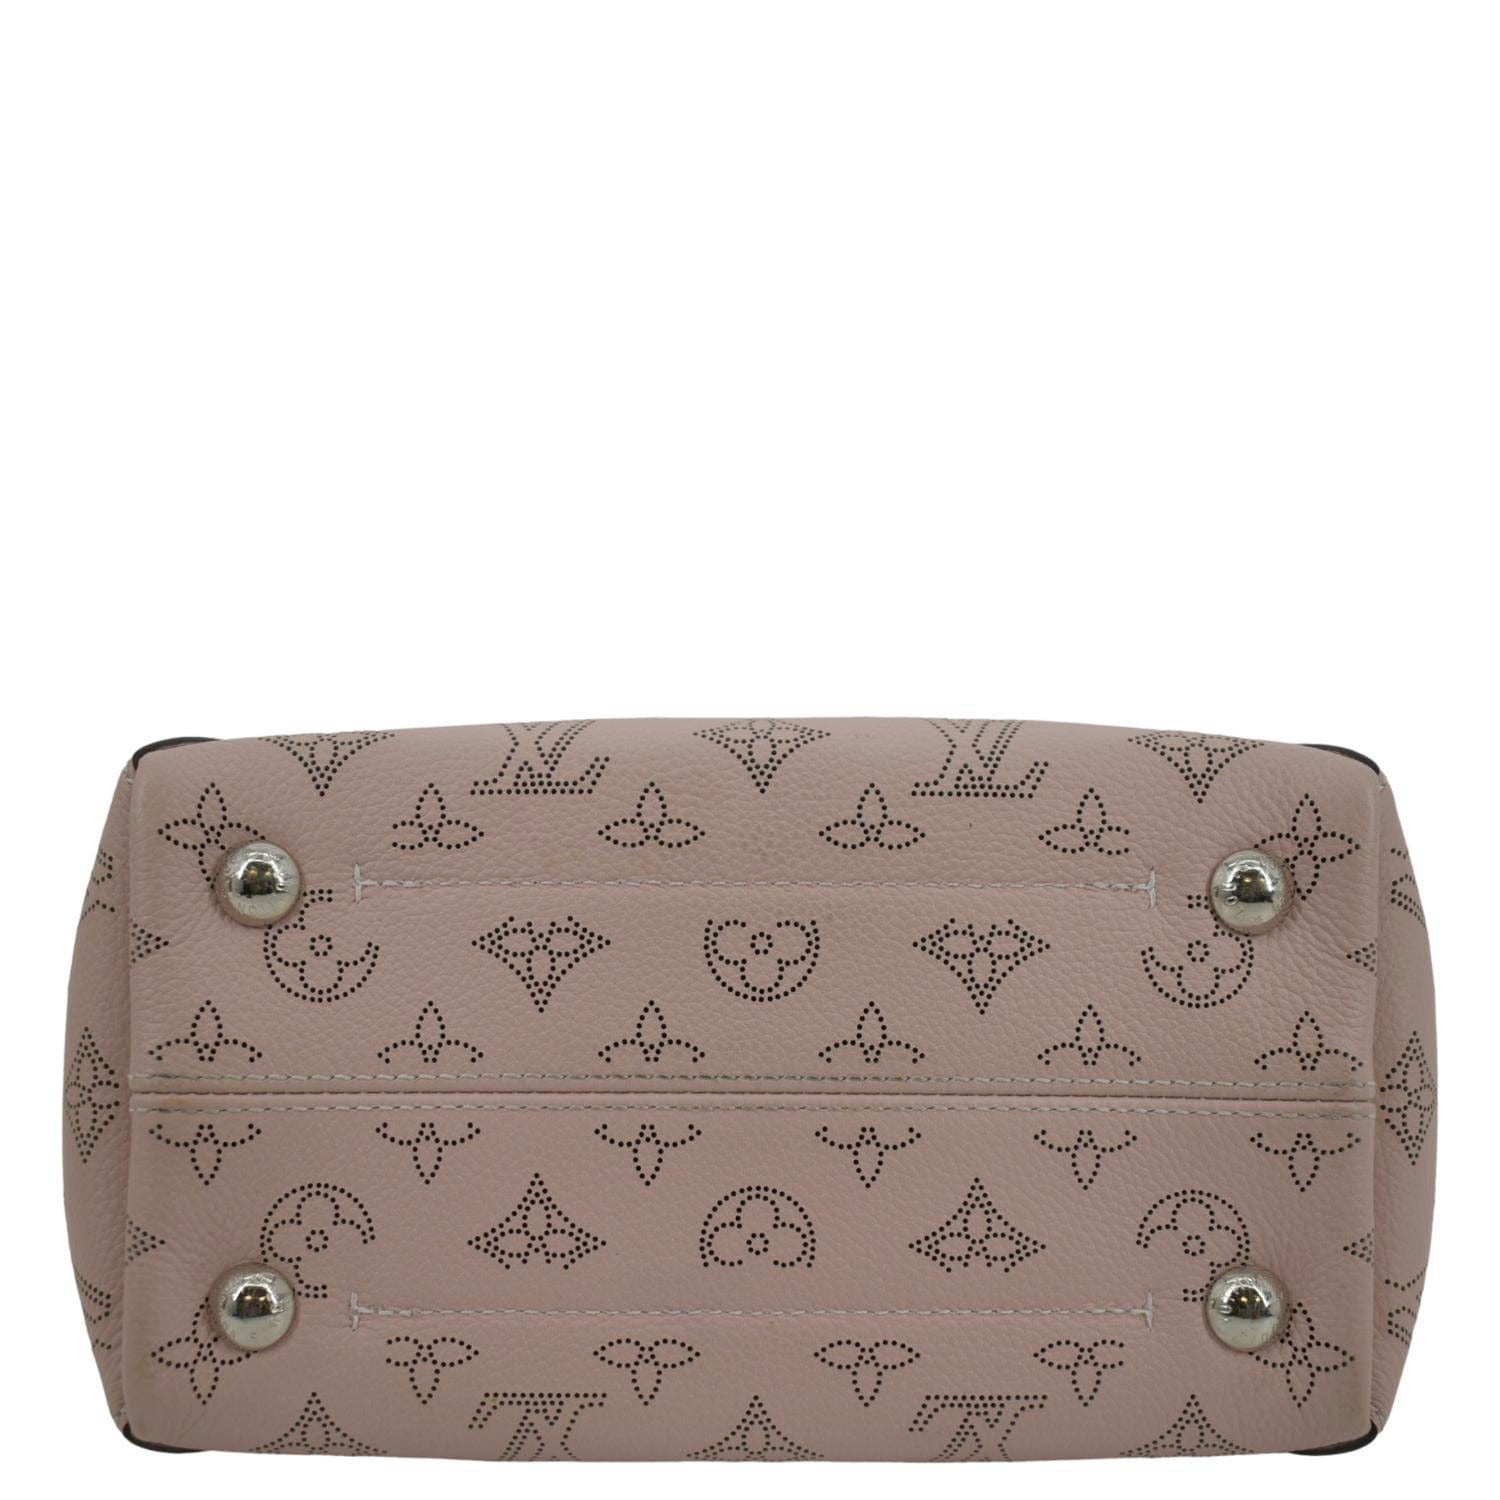 Louis Vuitton Mahina Hina PM - Totes, Handbags